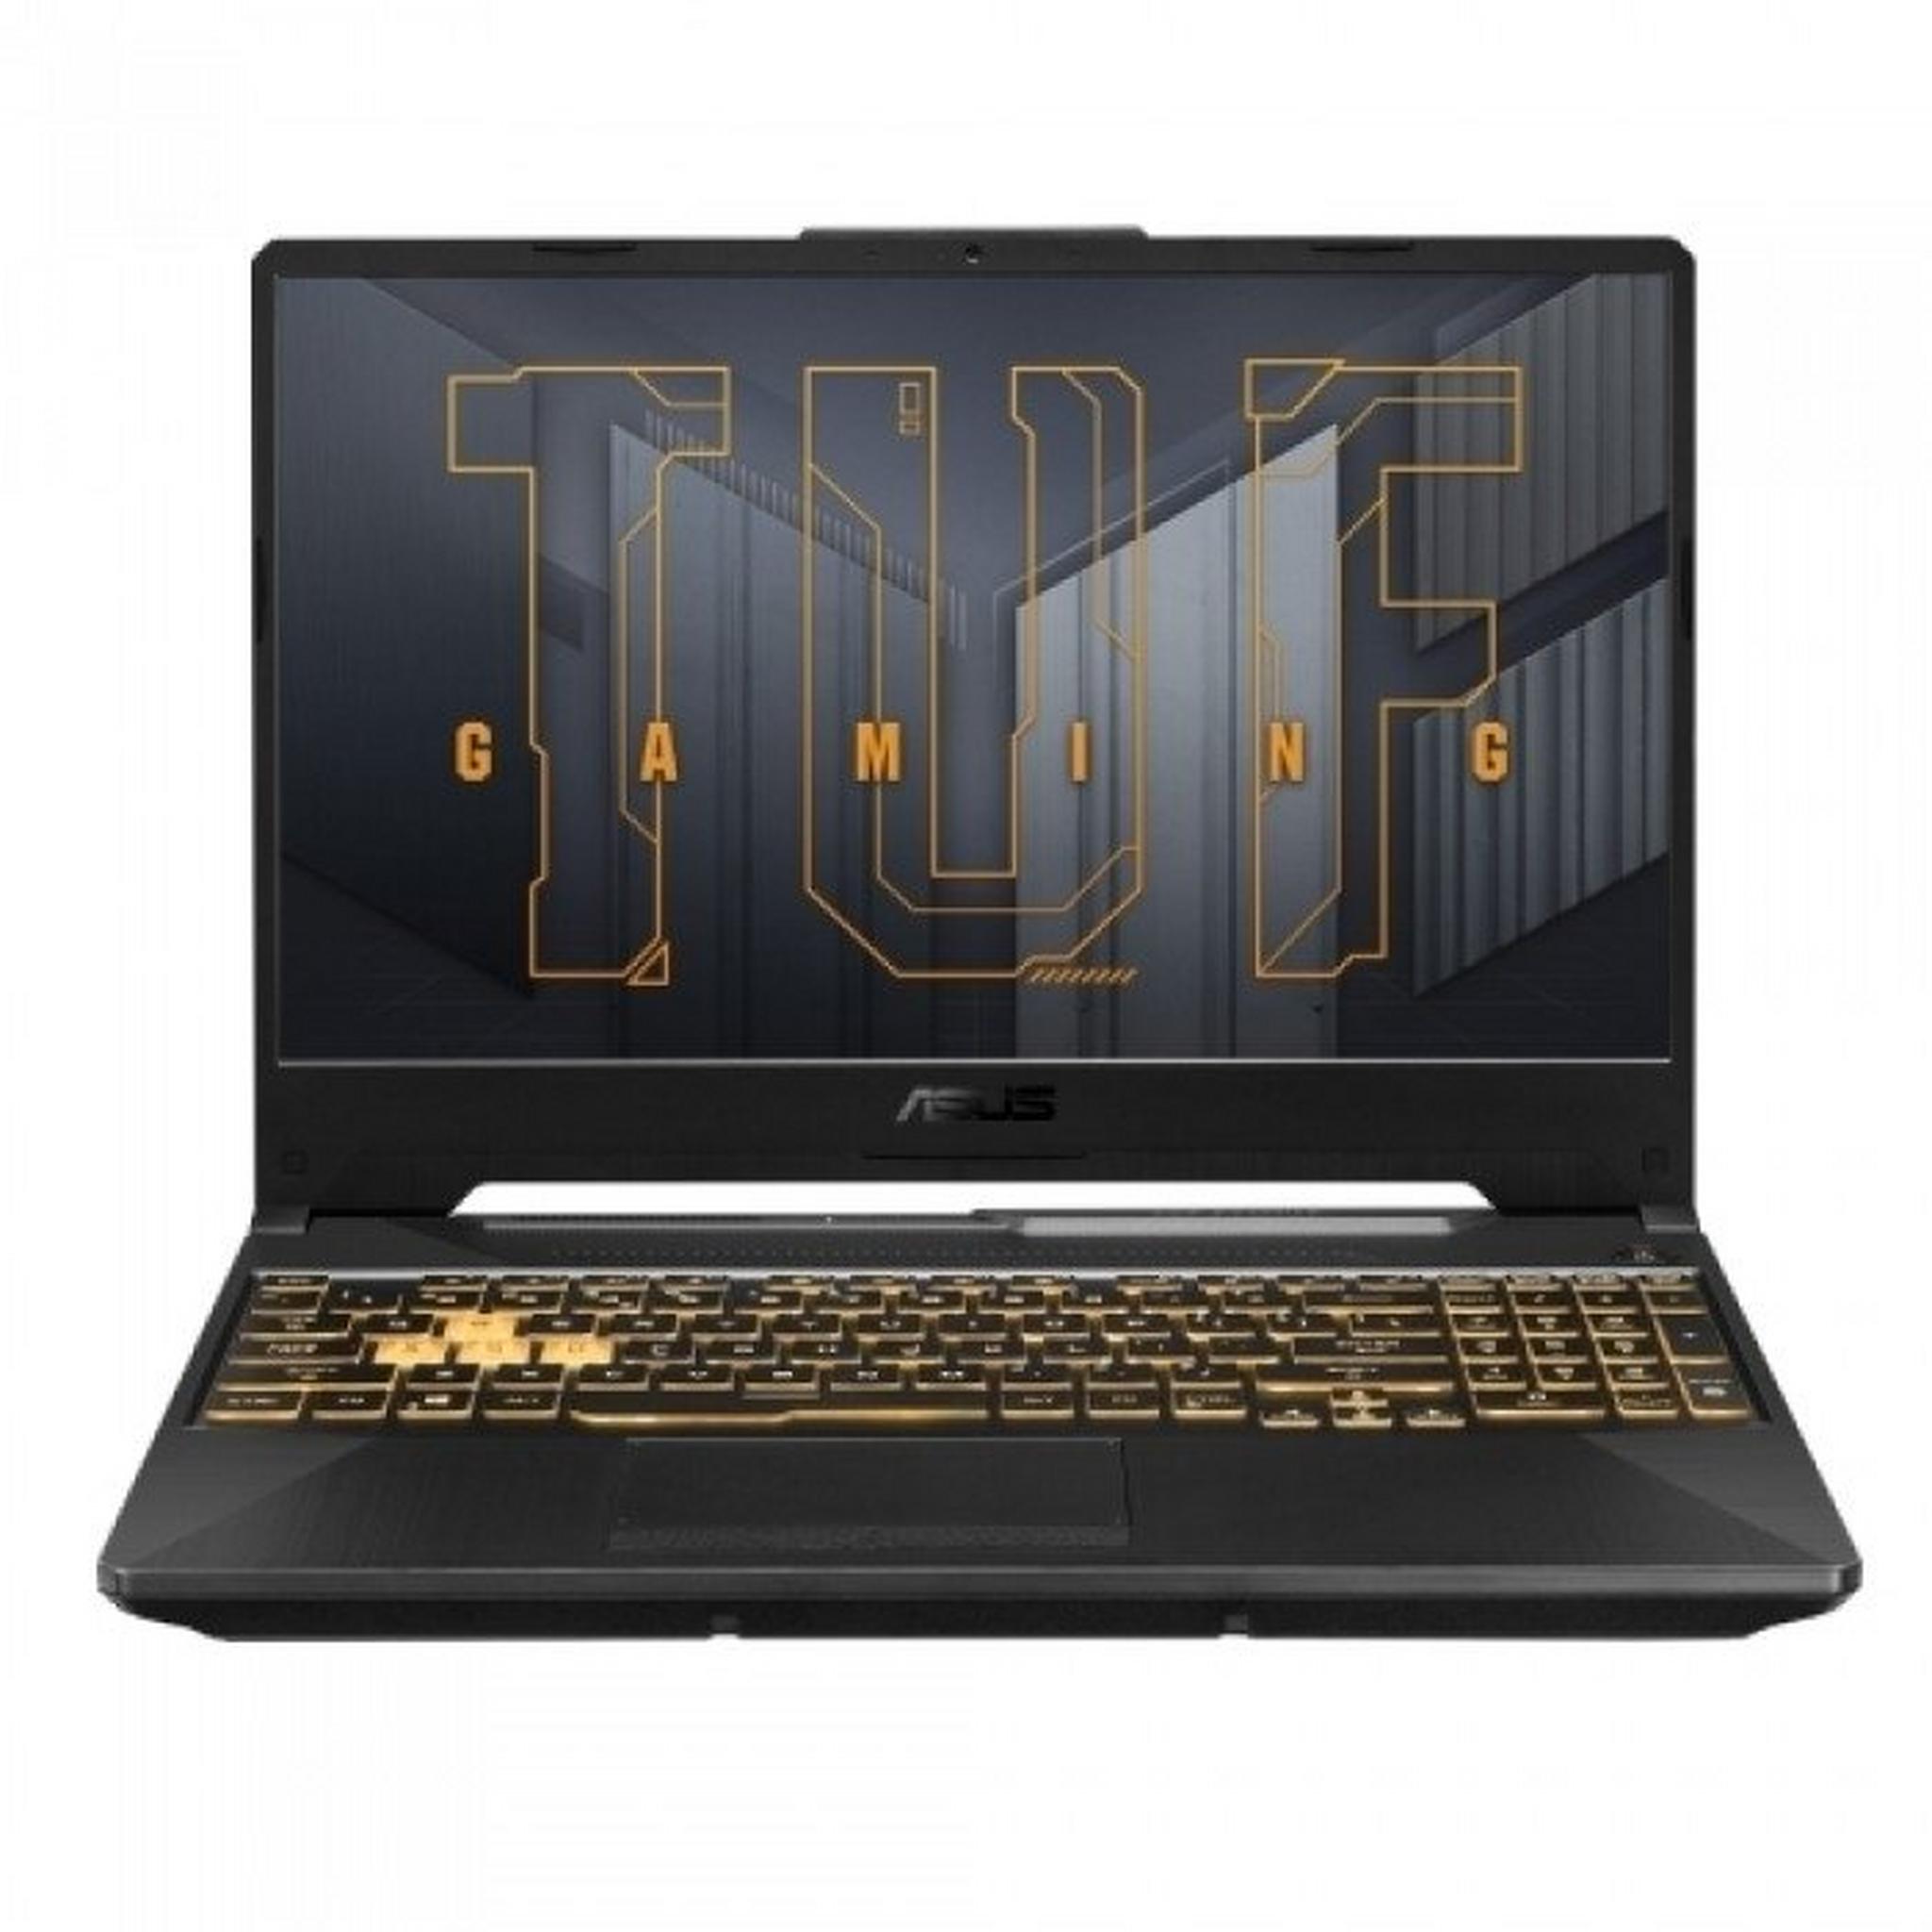 Asus TUF intel core i7, 11th Gen Ram 16GB, 512GB SSD, 15.6-inch Gaming Laptop